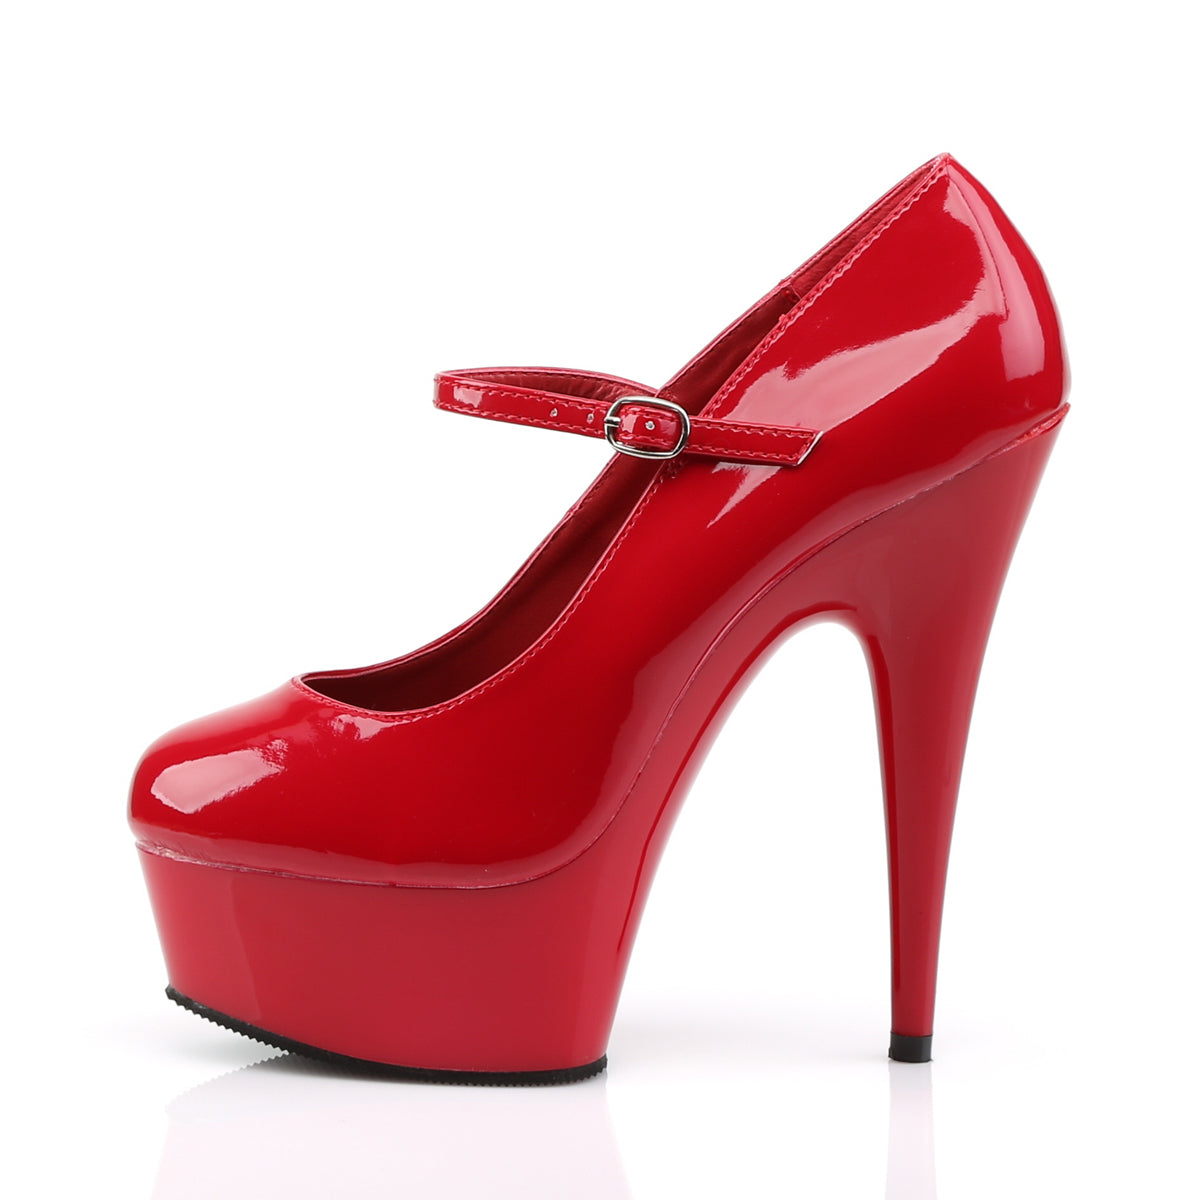 DELIGHT-687 Pleaser 6 Inch Heel Red Pole Dancing Platforms-Pleaser- Sexy Shoes Pole Dance Heels